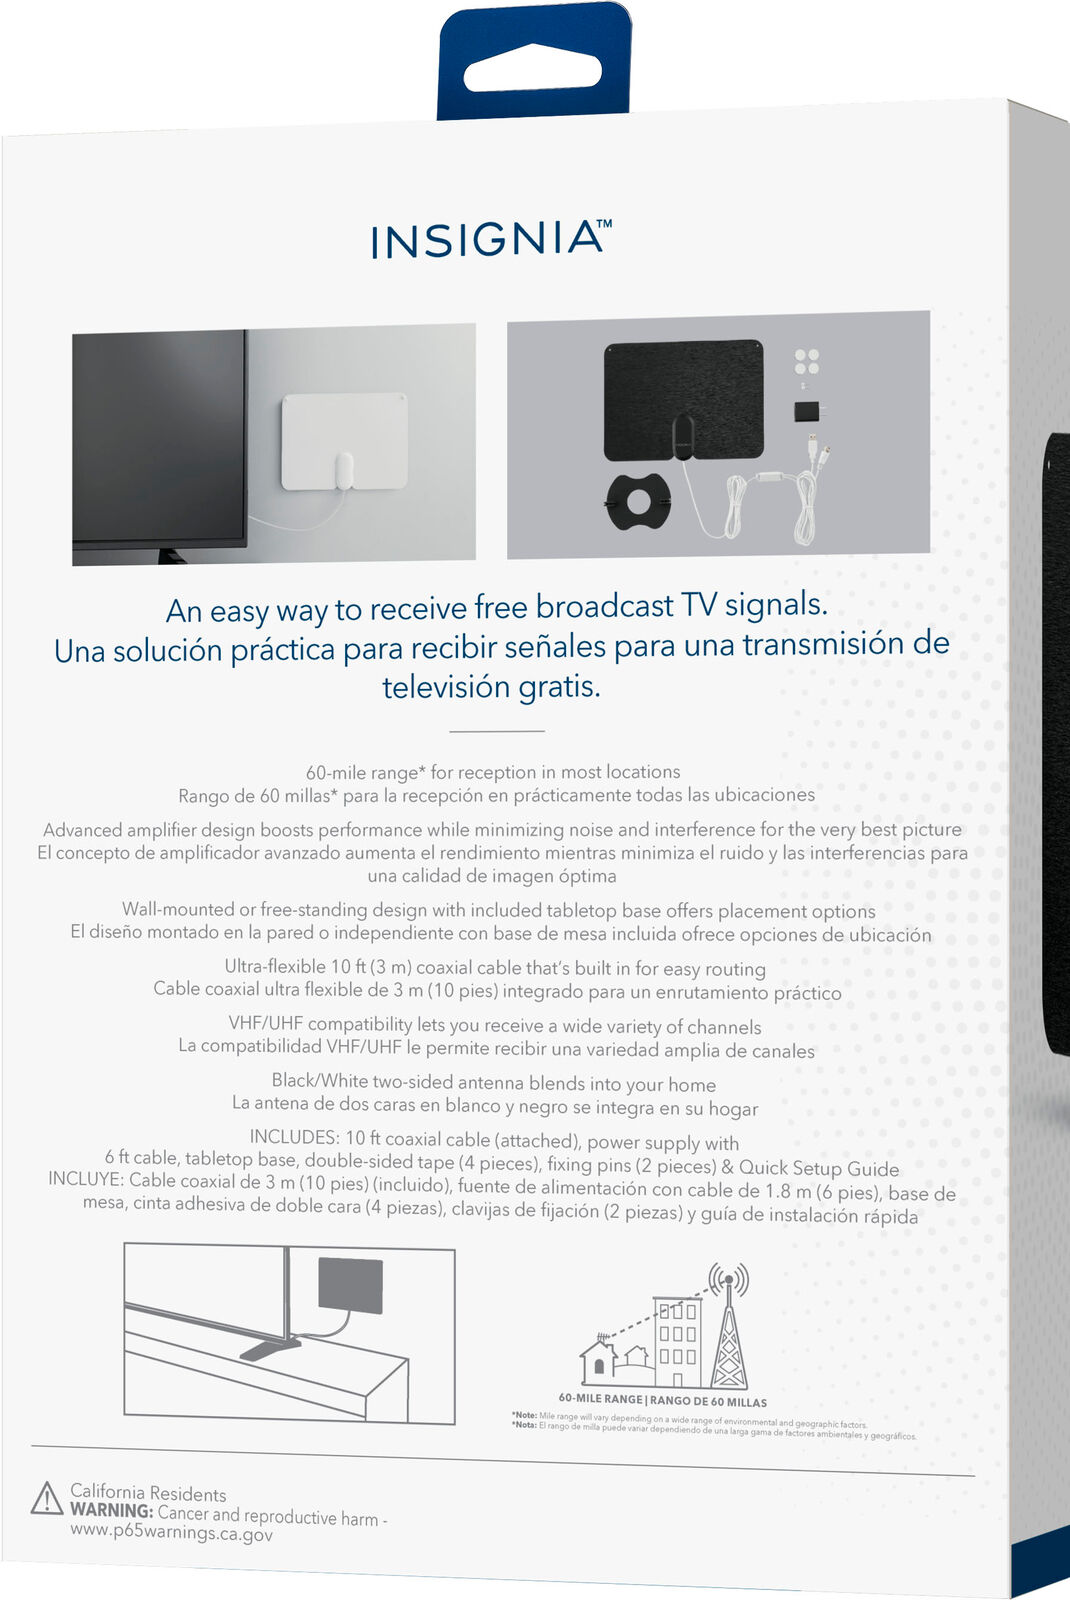 Insignia- Amplified Ultra-Thin Indoor HDTV Antenna - 60 Mile Range - Black